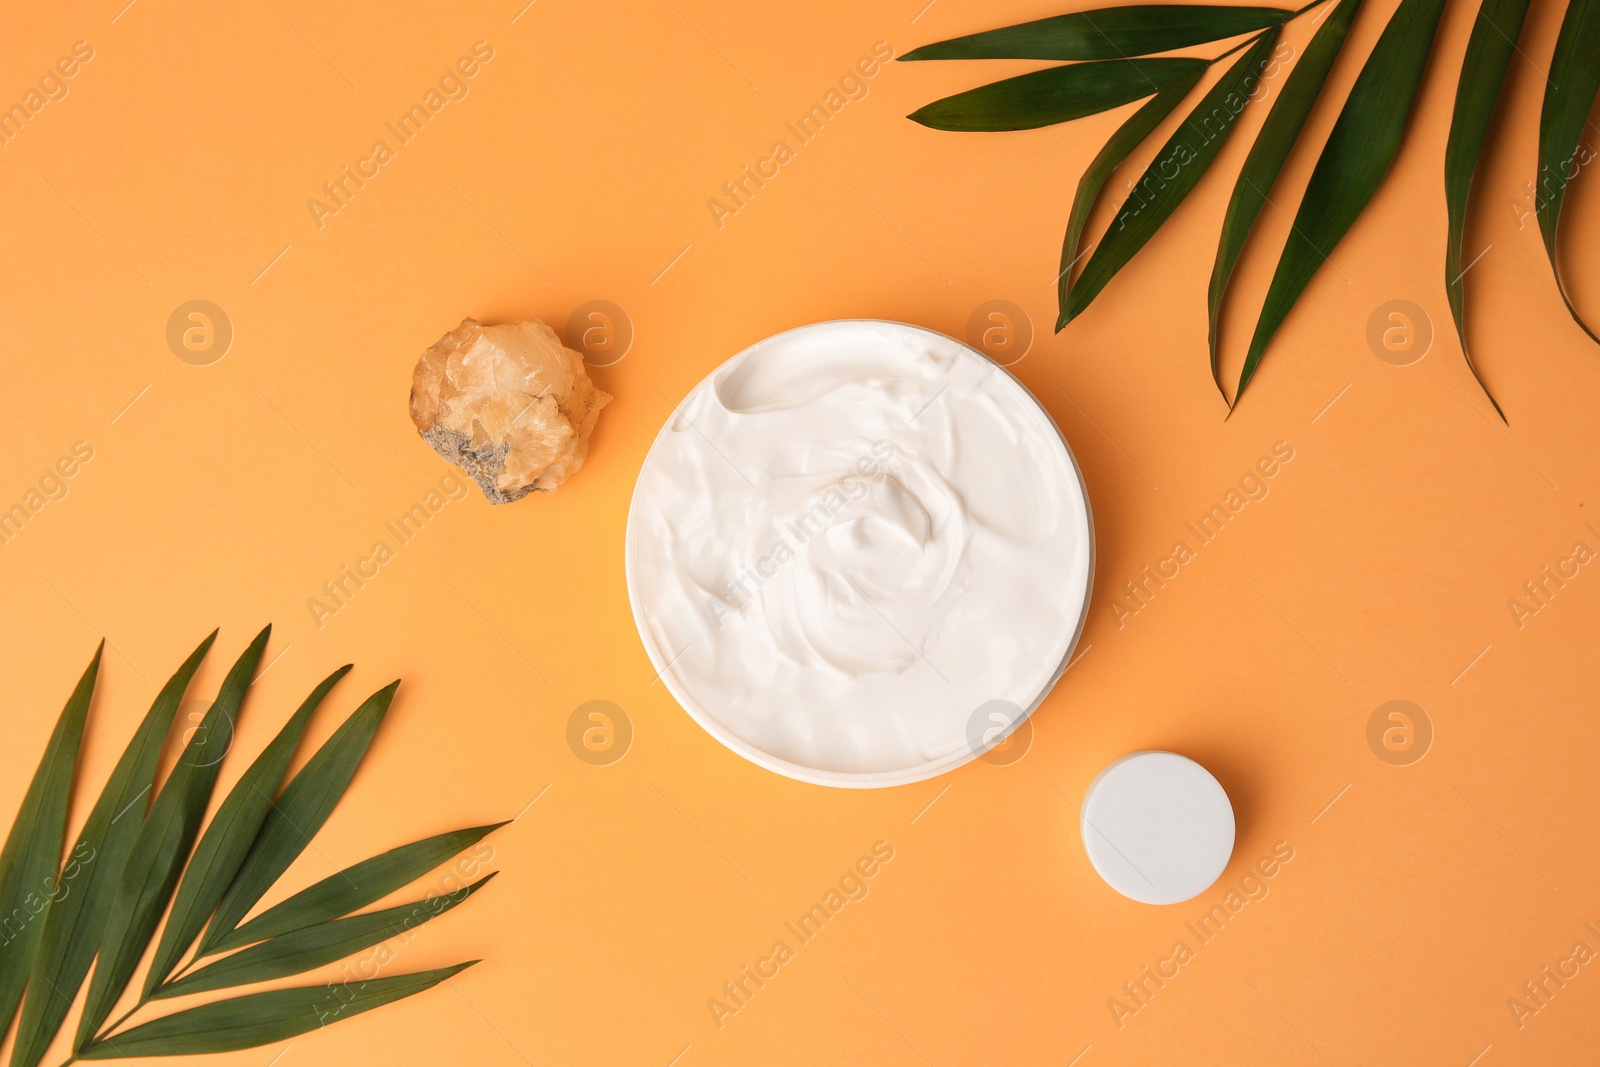 Photo of Cosmetic products, quartz gemstone and palm leaves on orange background, flat lay